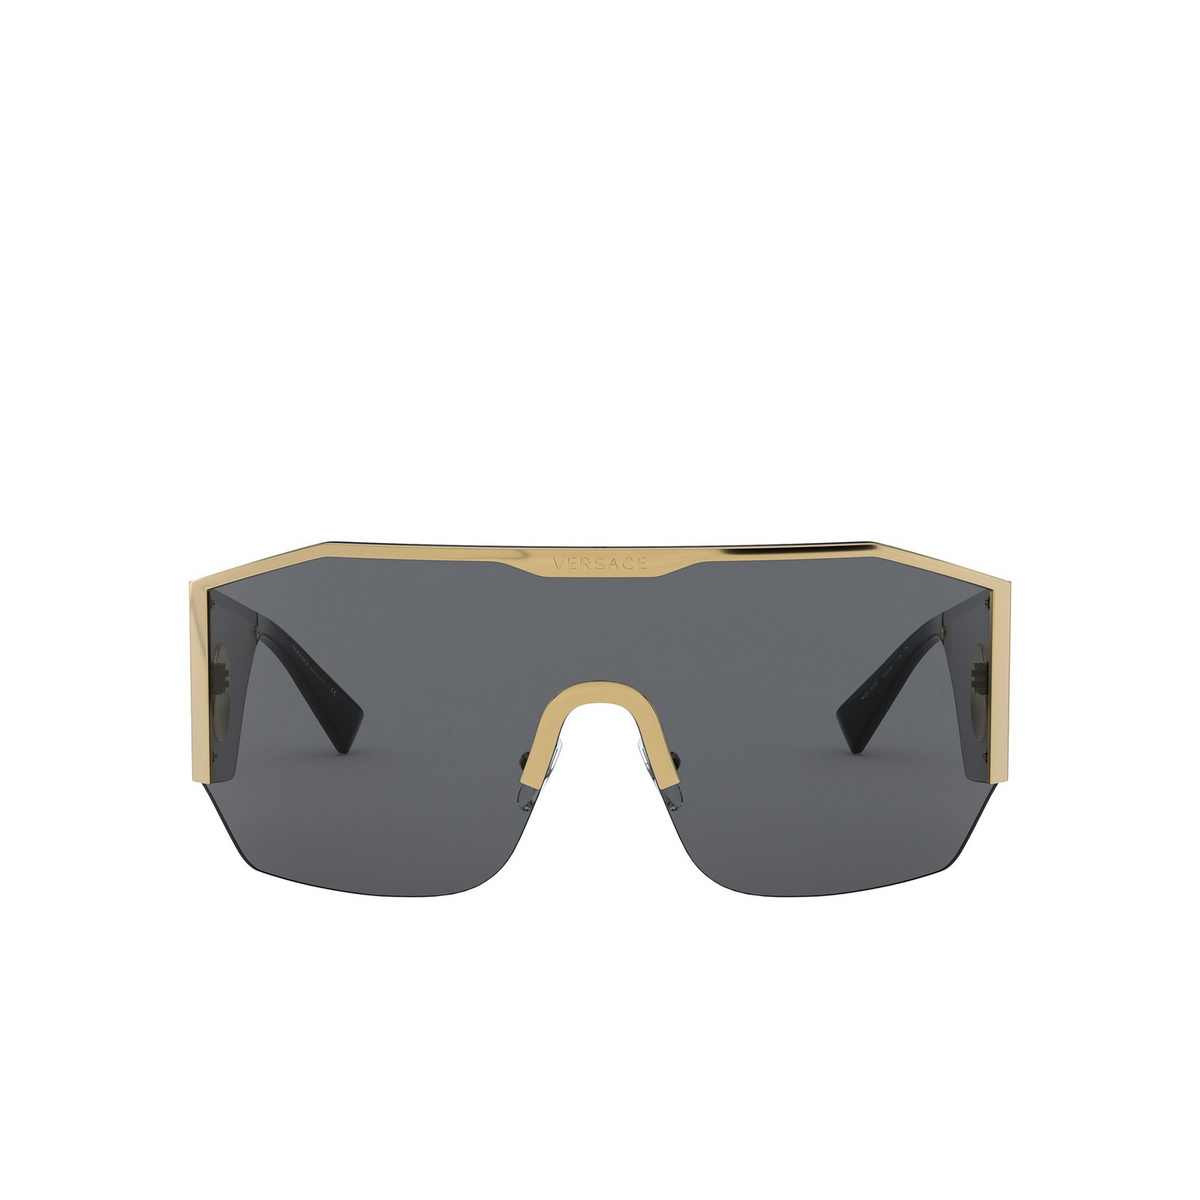 Versace® Square Sunglasses: VE2220 color Gold 100287 - front view.